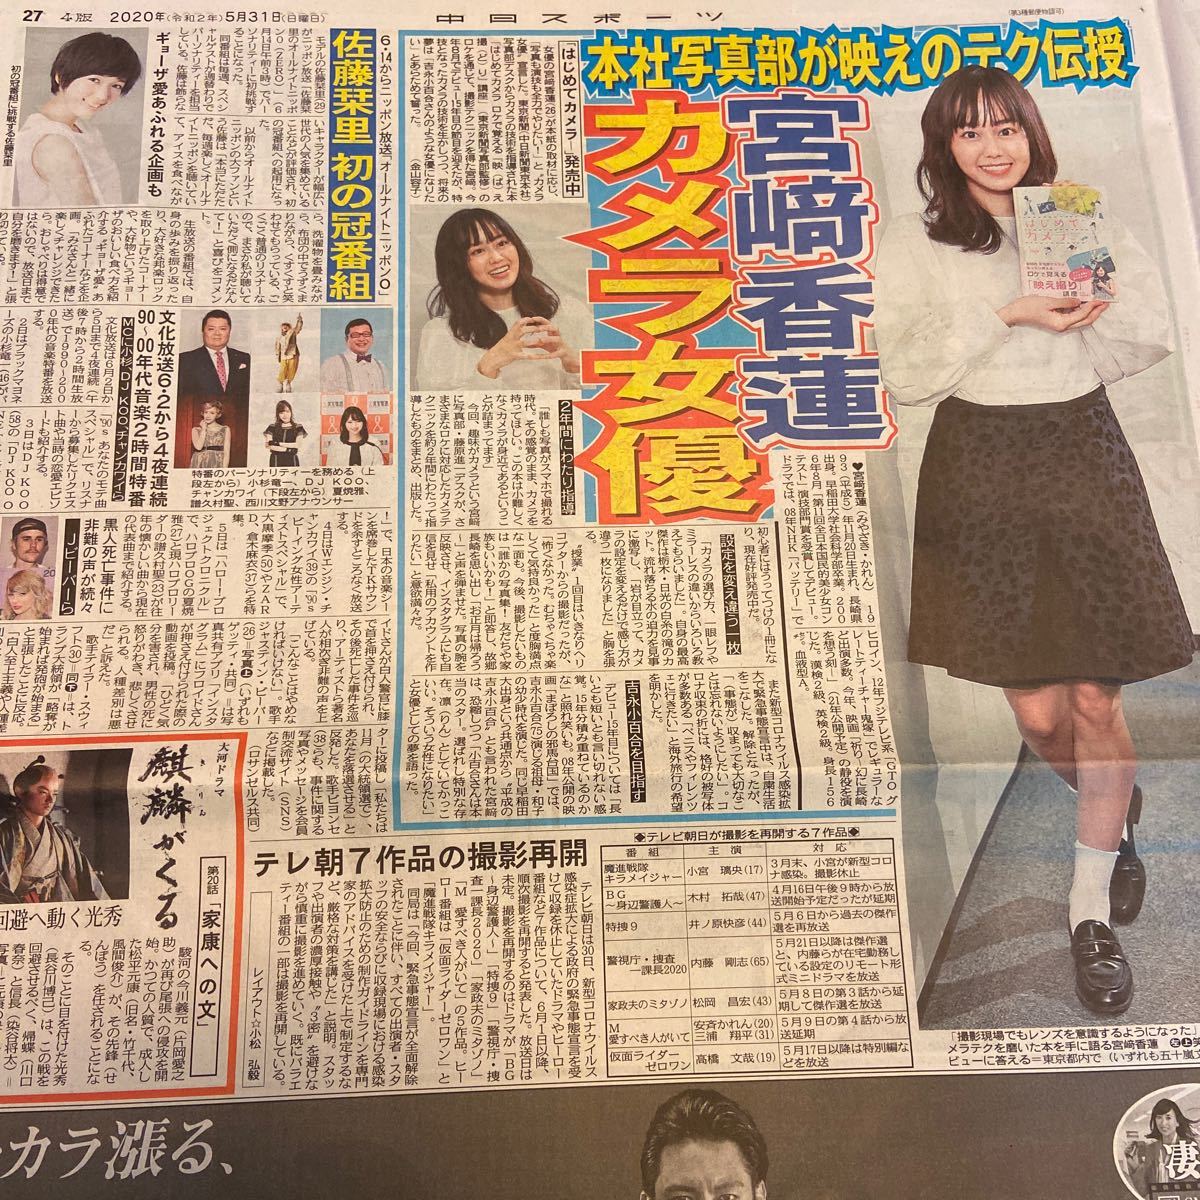 2020.5/31 newspaper chronicle . Miyazaki . lotus Sato ..